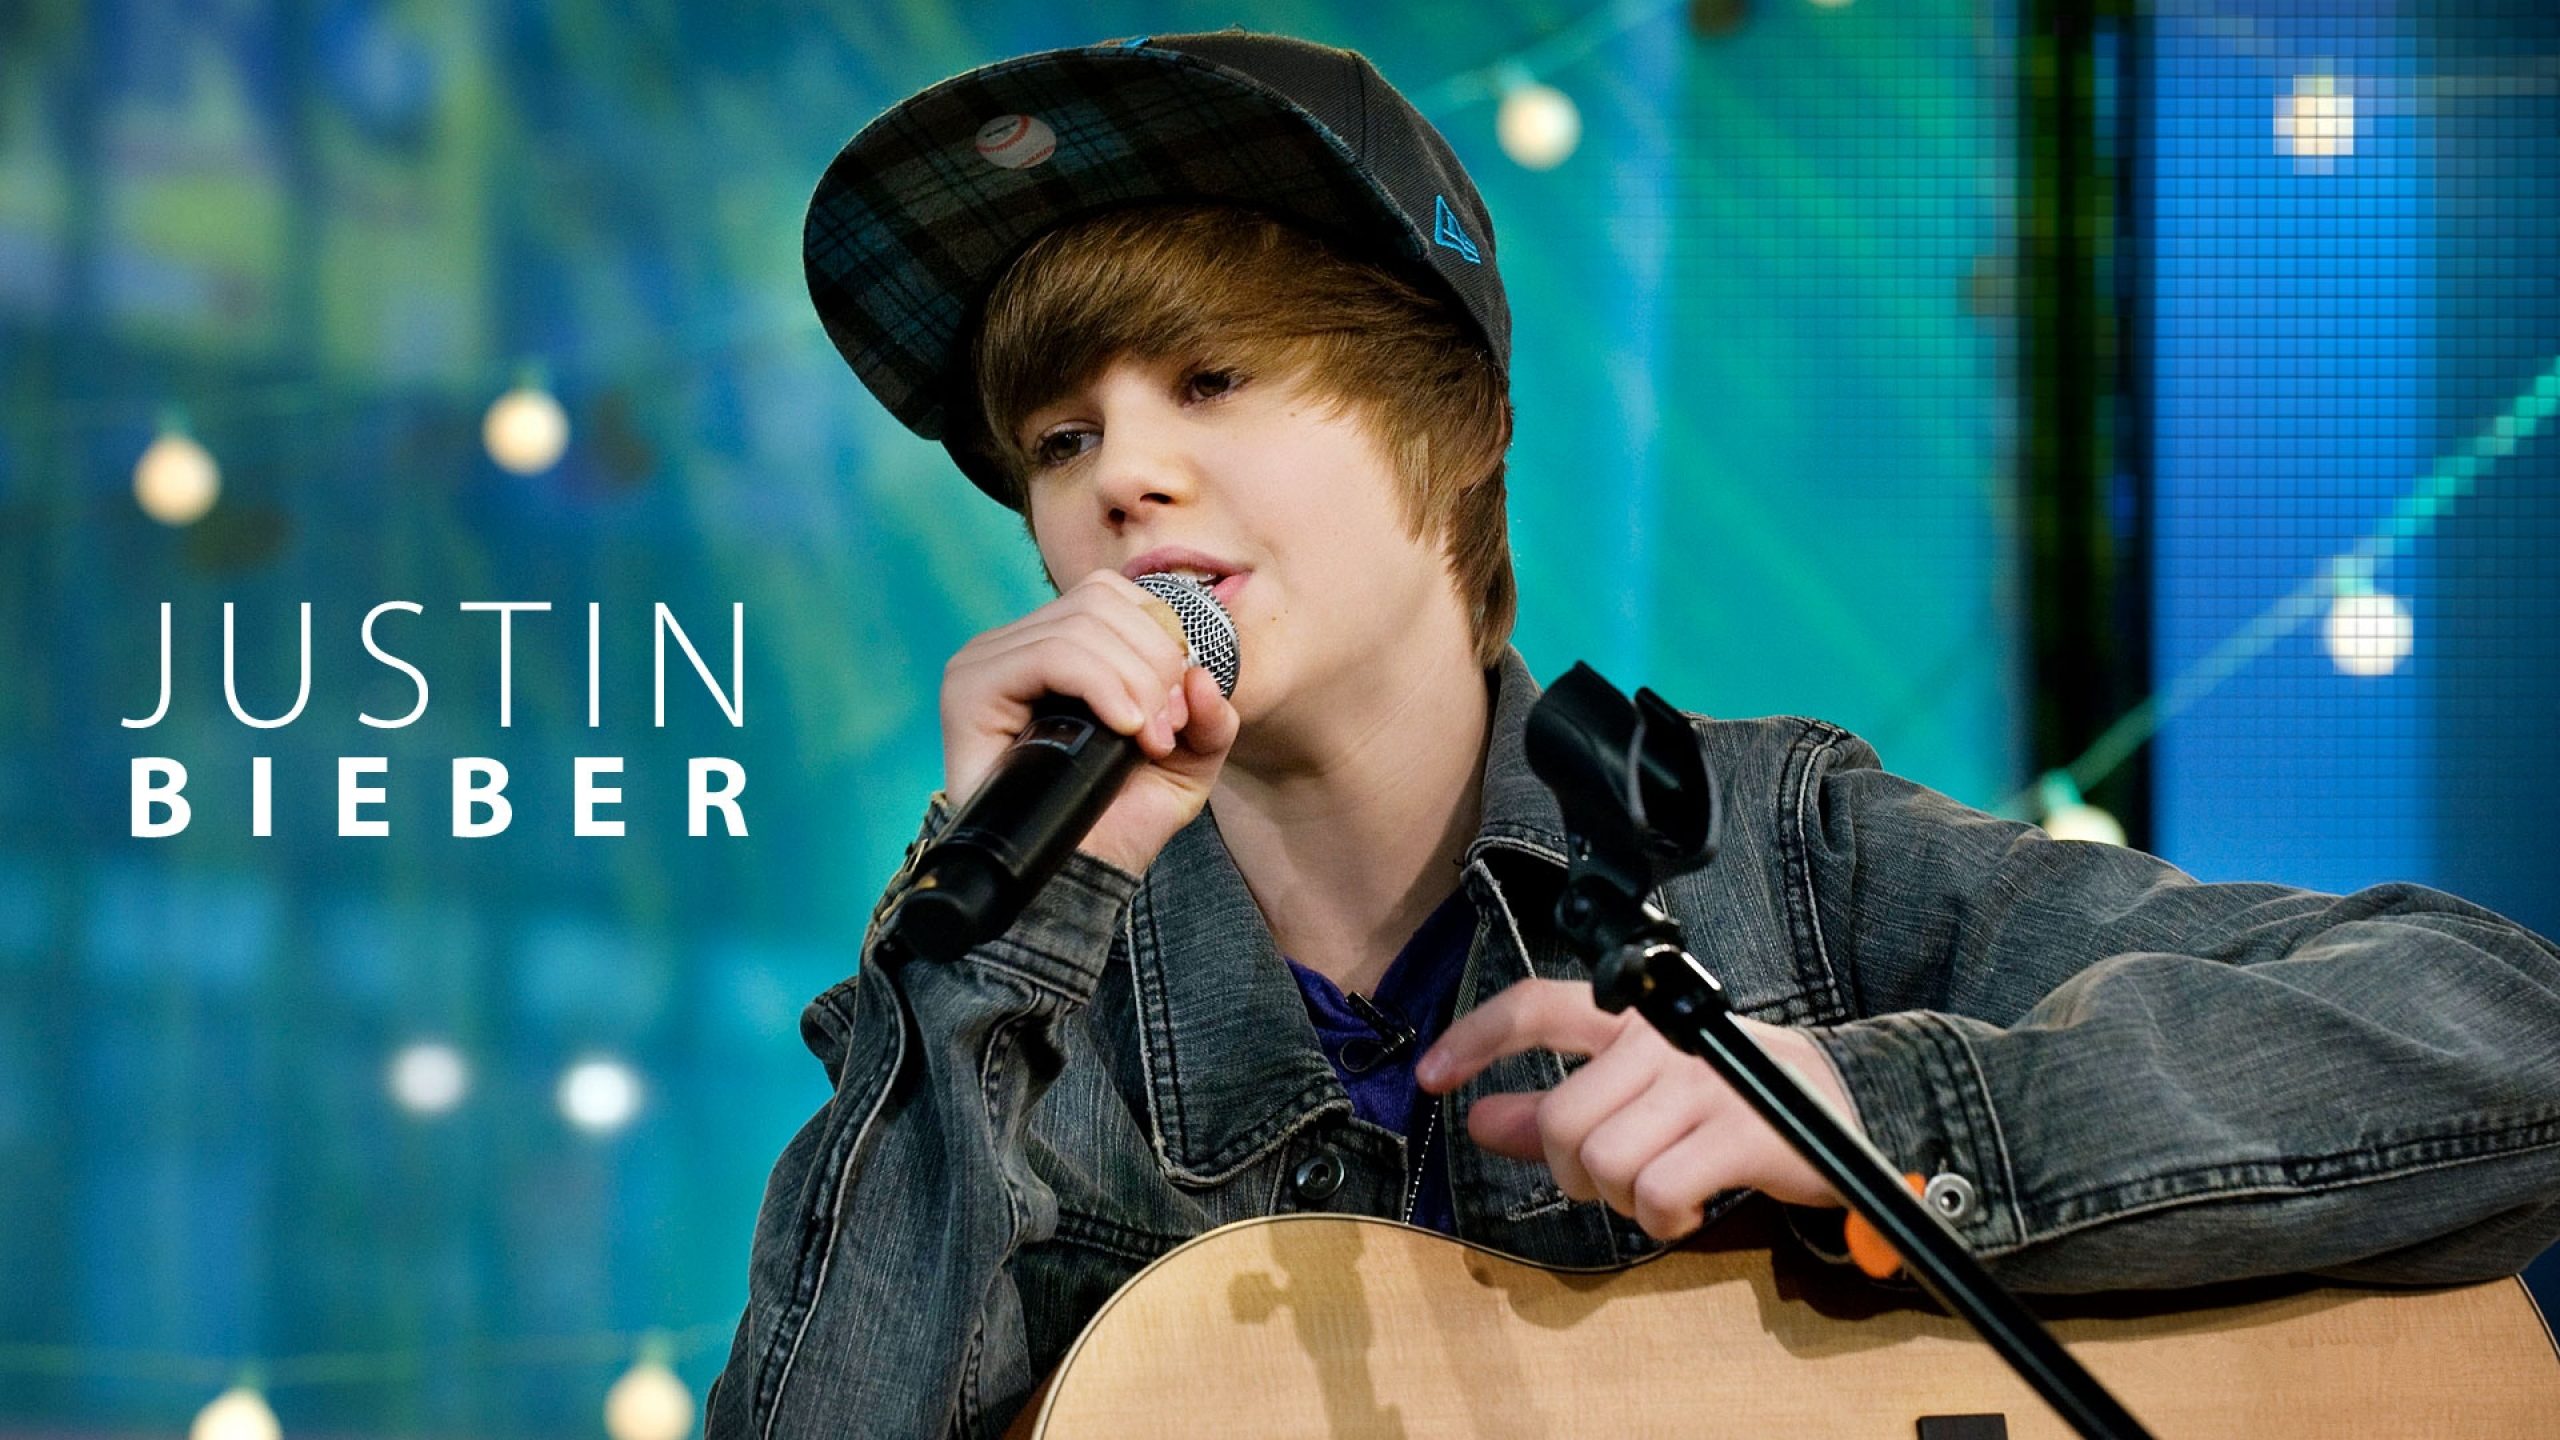 Download Justin Bieber Wallpaper #o2szq hdxwallpaperz.com